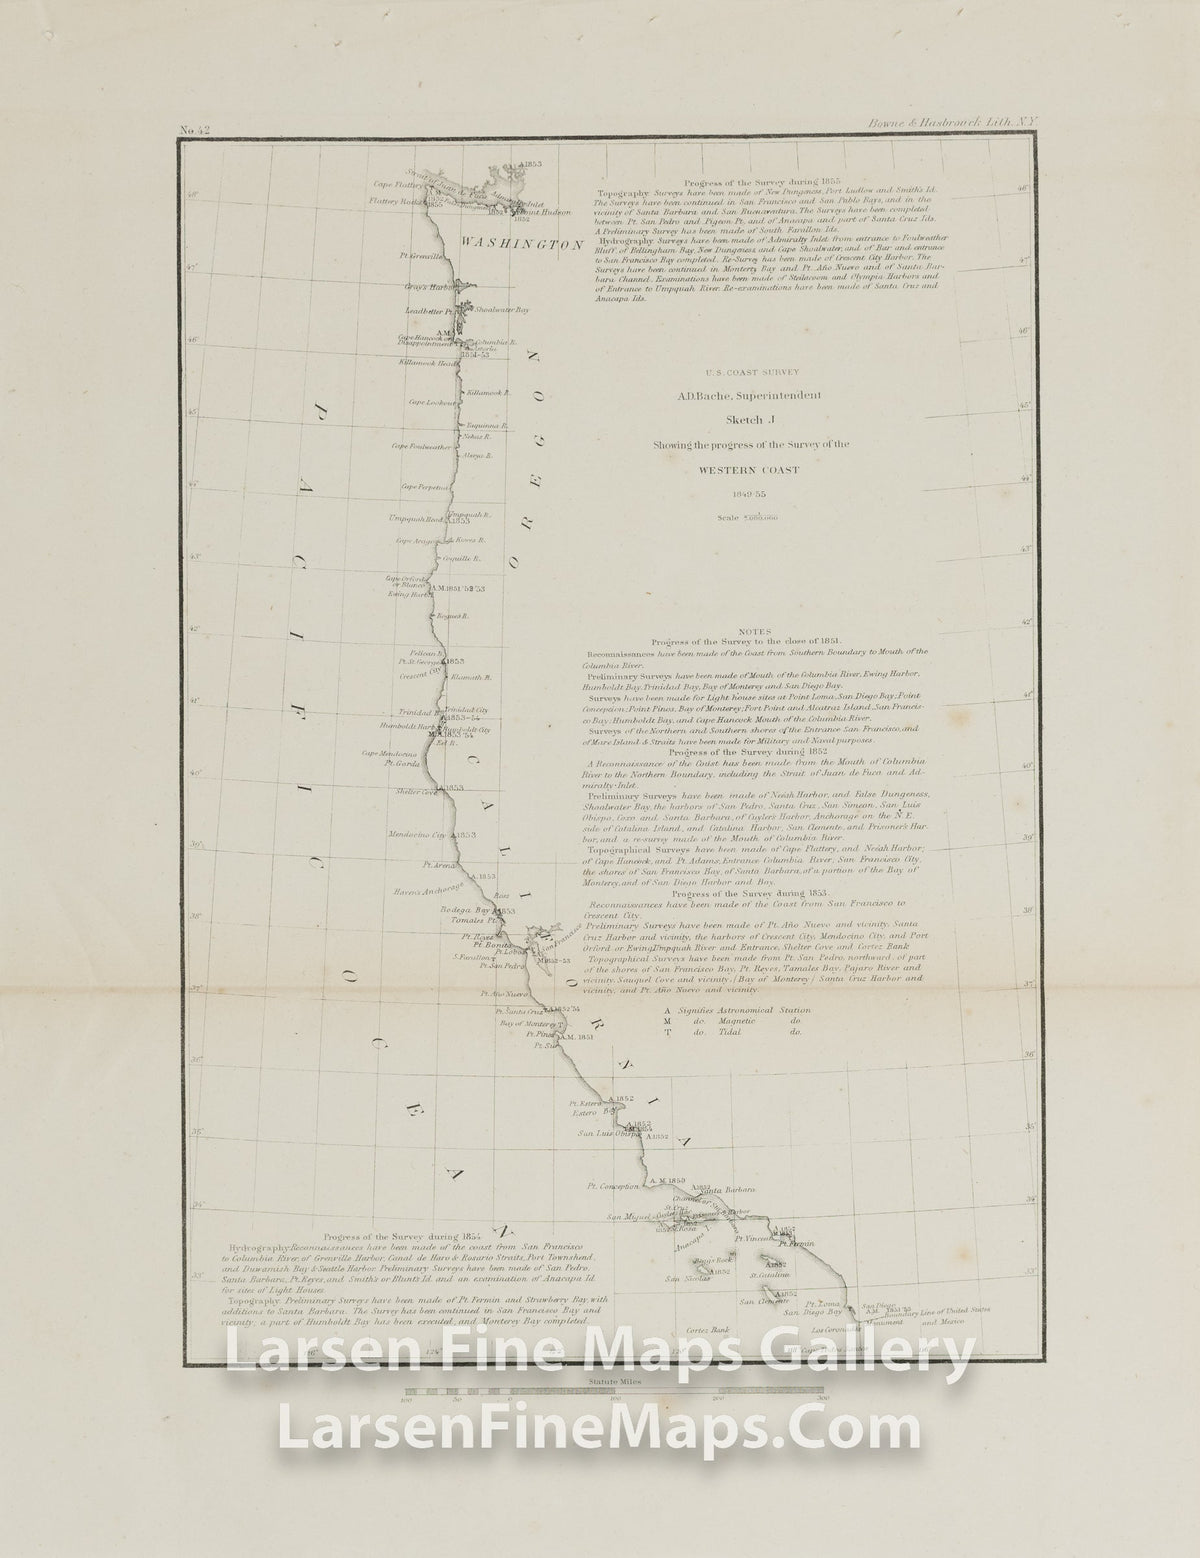 U.S. Coast Survey A.D. Bache Superintendent, Sketch J, Showing the progress of the Survey of the Western Coast 1849-55